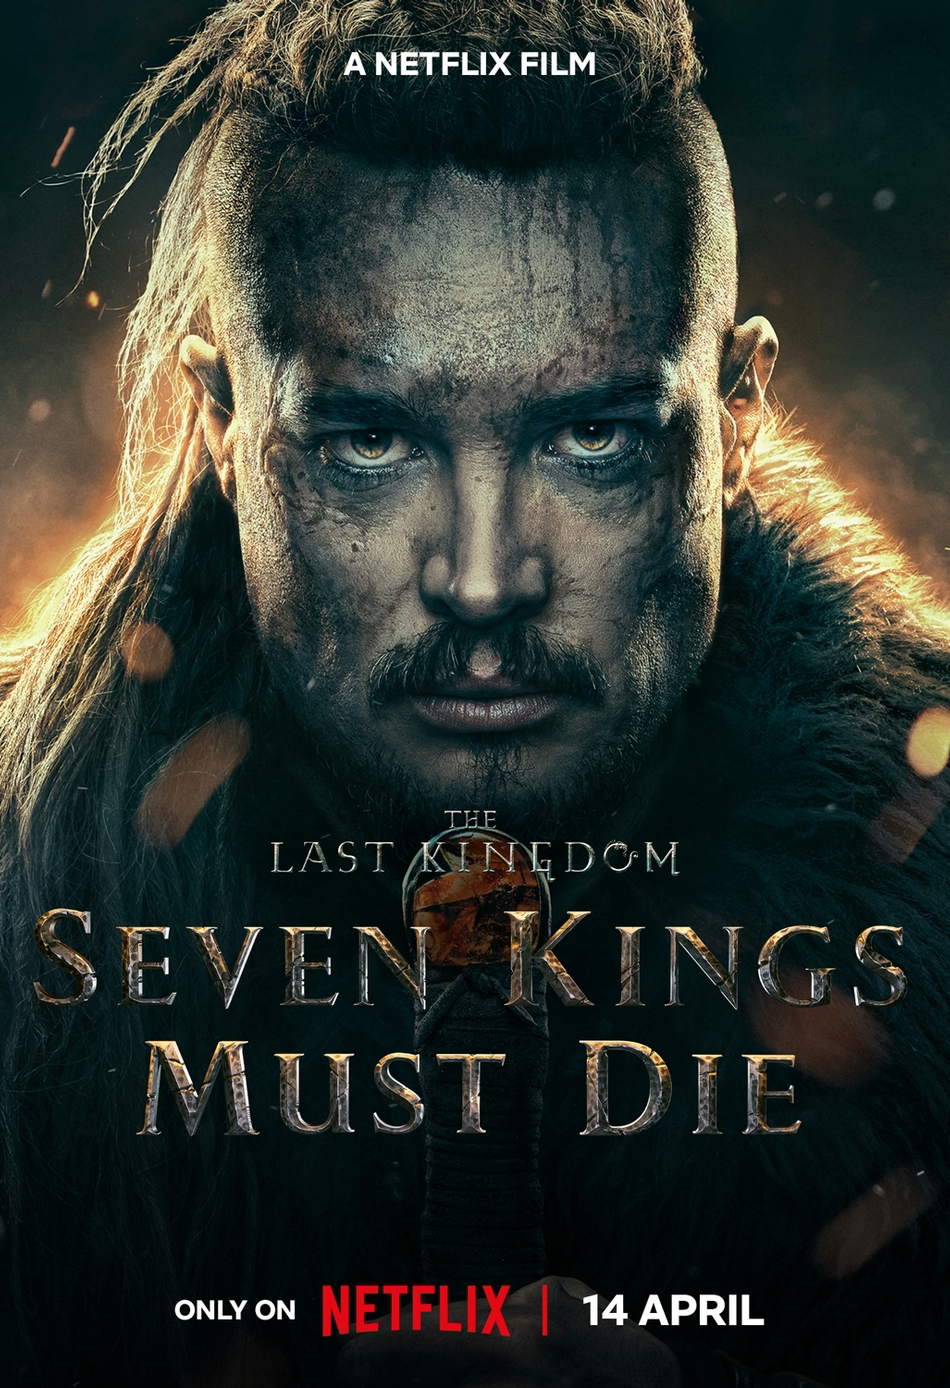 Xem Phim Cái chết của bảy vị vua (The Last Kingdom: Seven Kings Must Die)